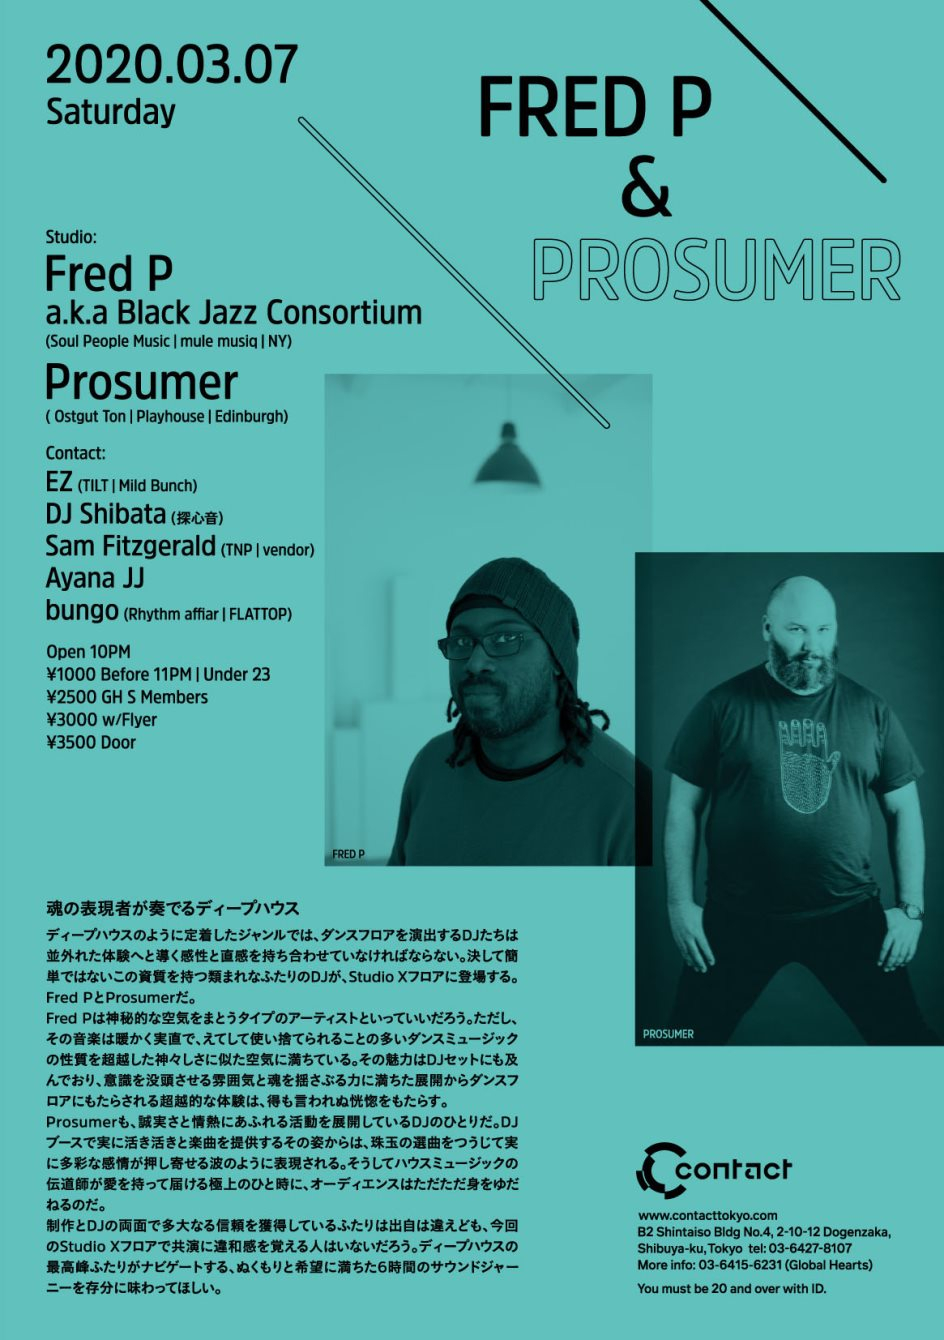 Fred P & Prosumer - Flyer back